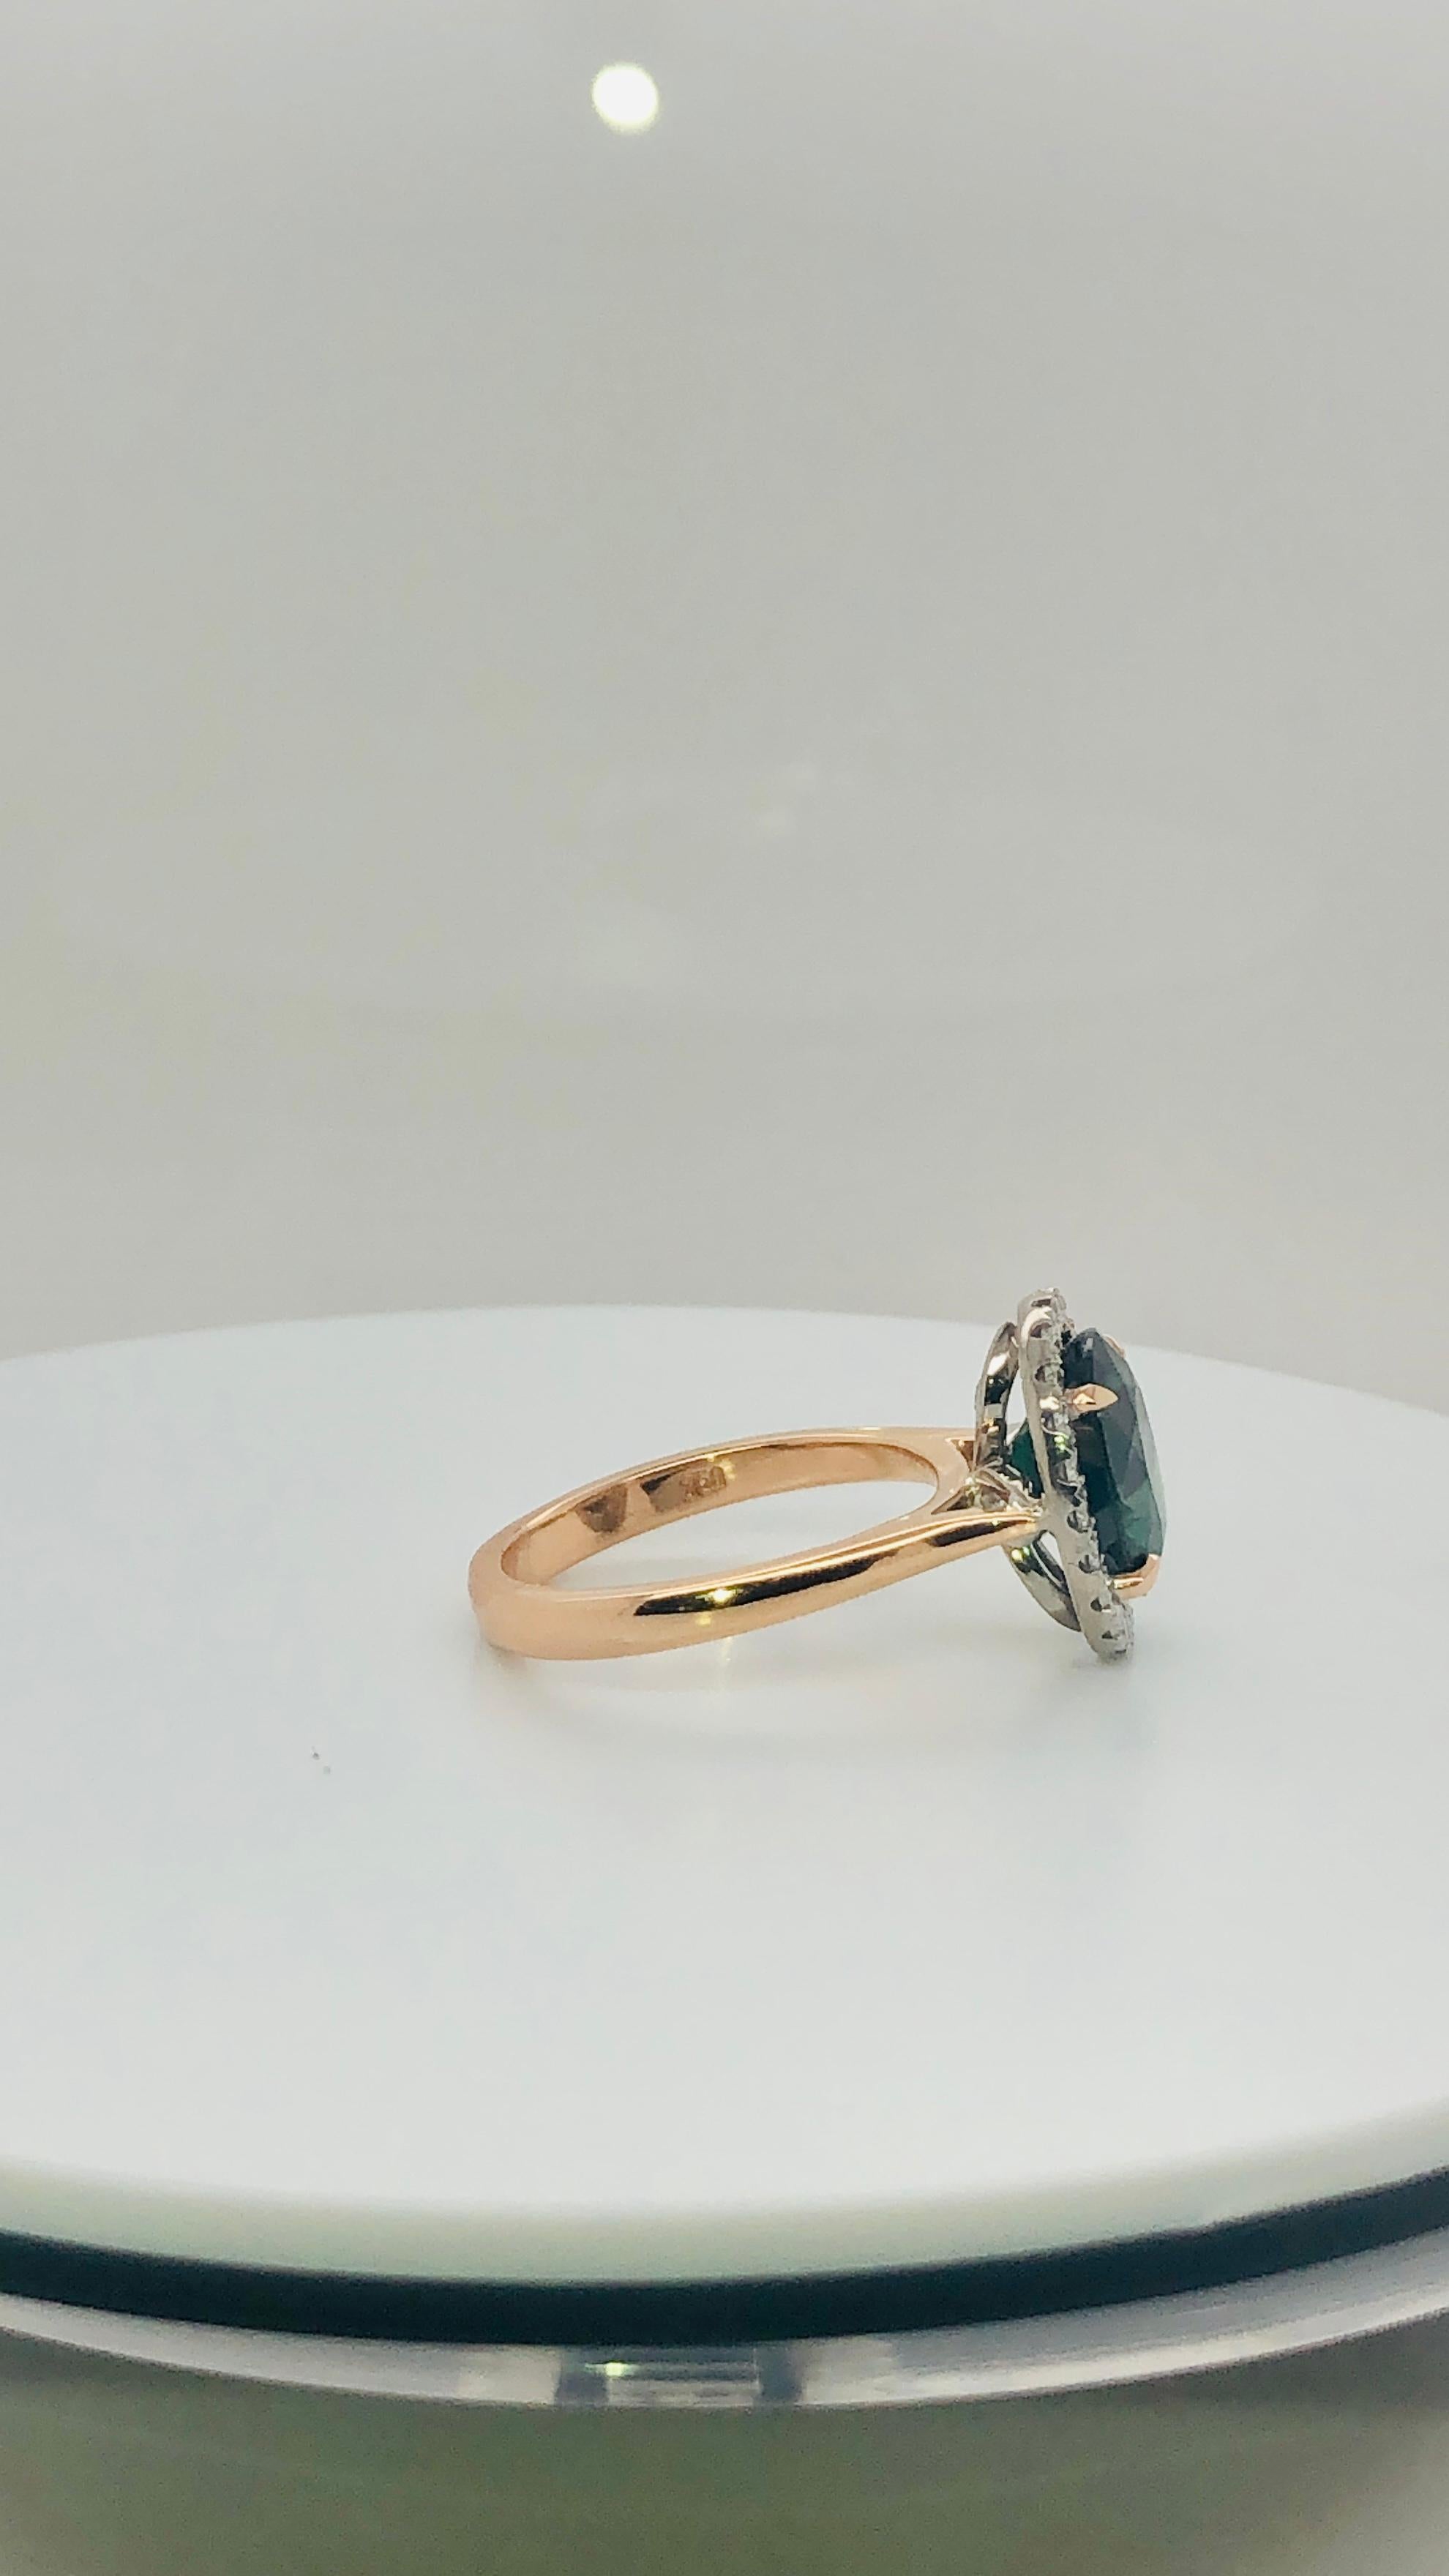 Oval Cut Certified Natural 3.73 Carat Australian Green Sapphire Diamond Engagement Ring